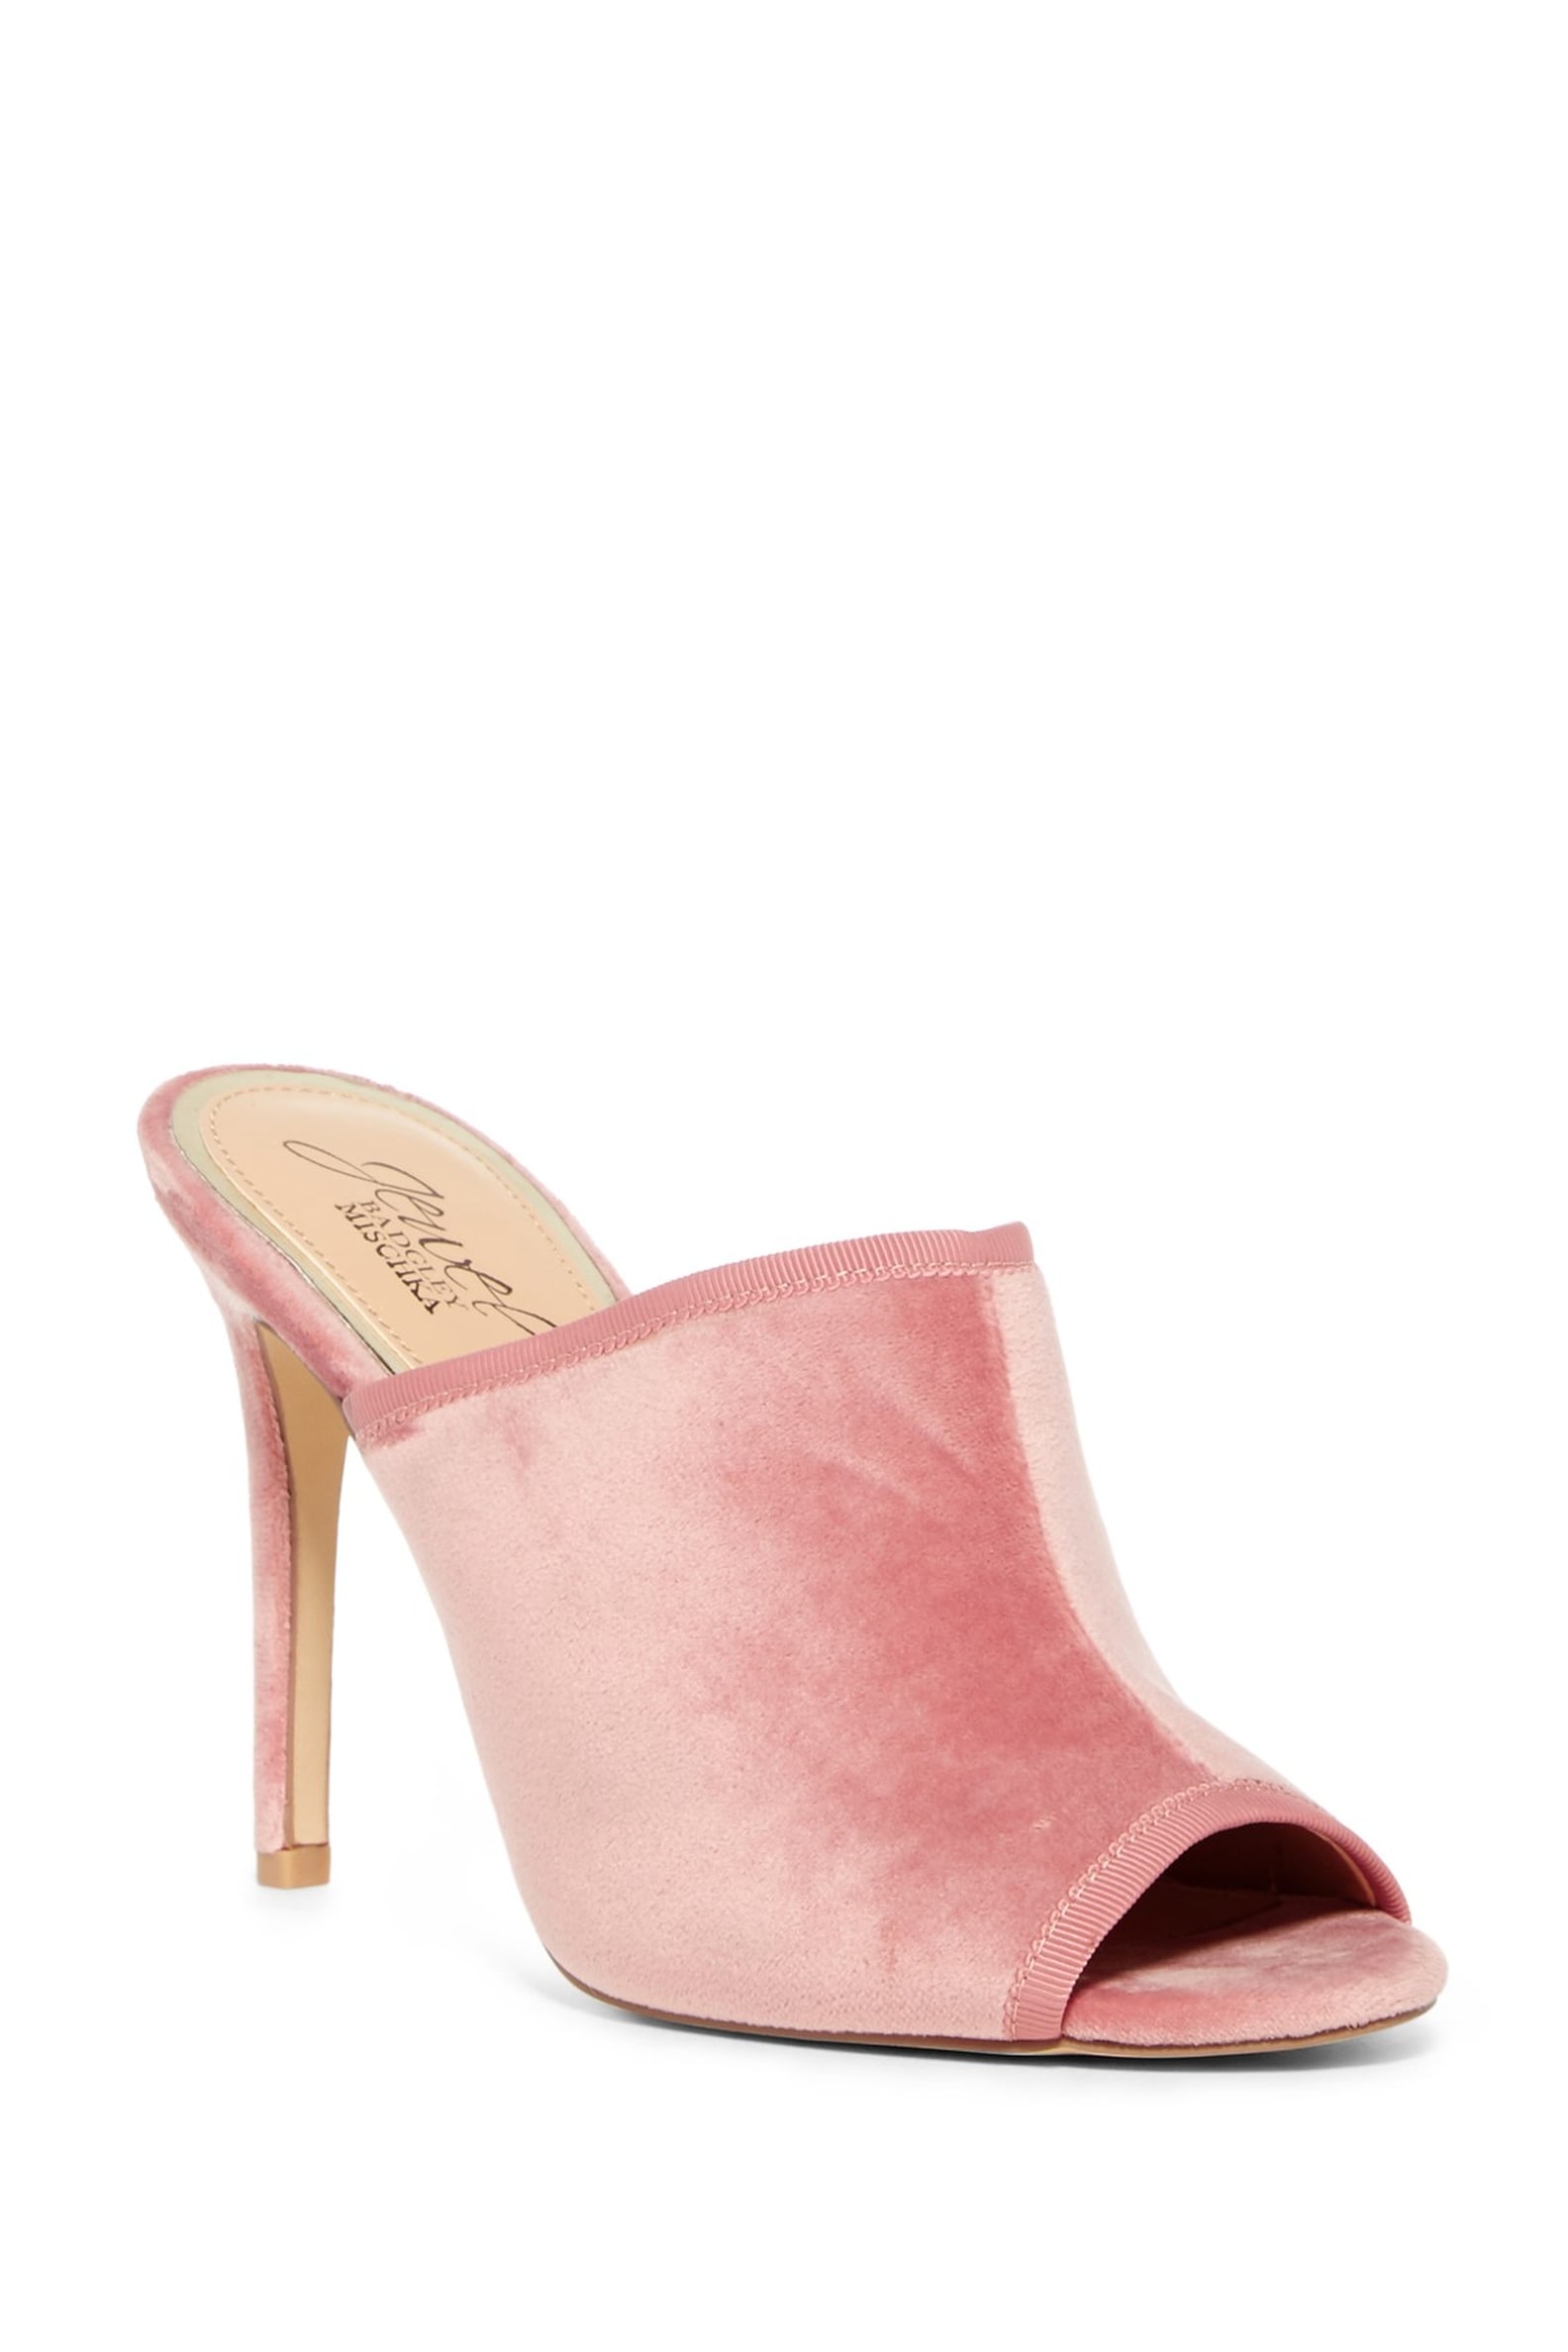 Olivia Palermo's Pink Velvet Mules | POPSUGAR Fashion